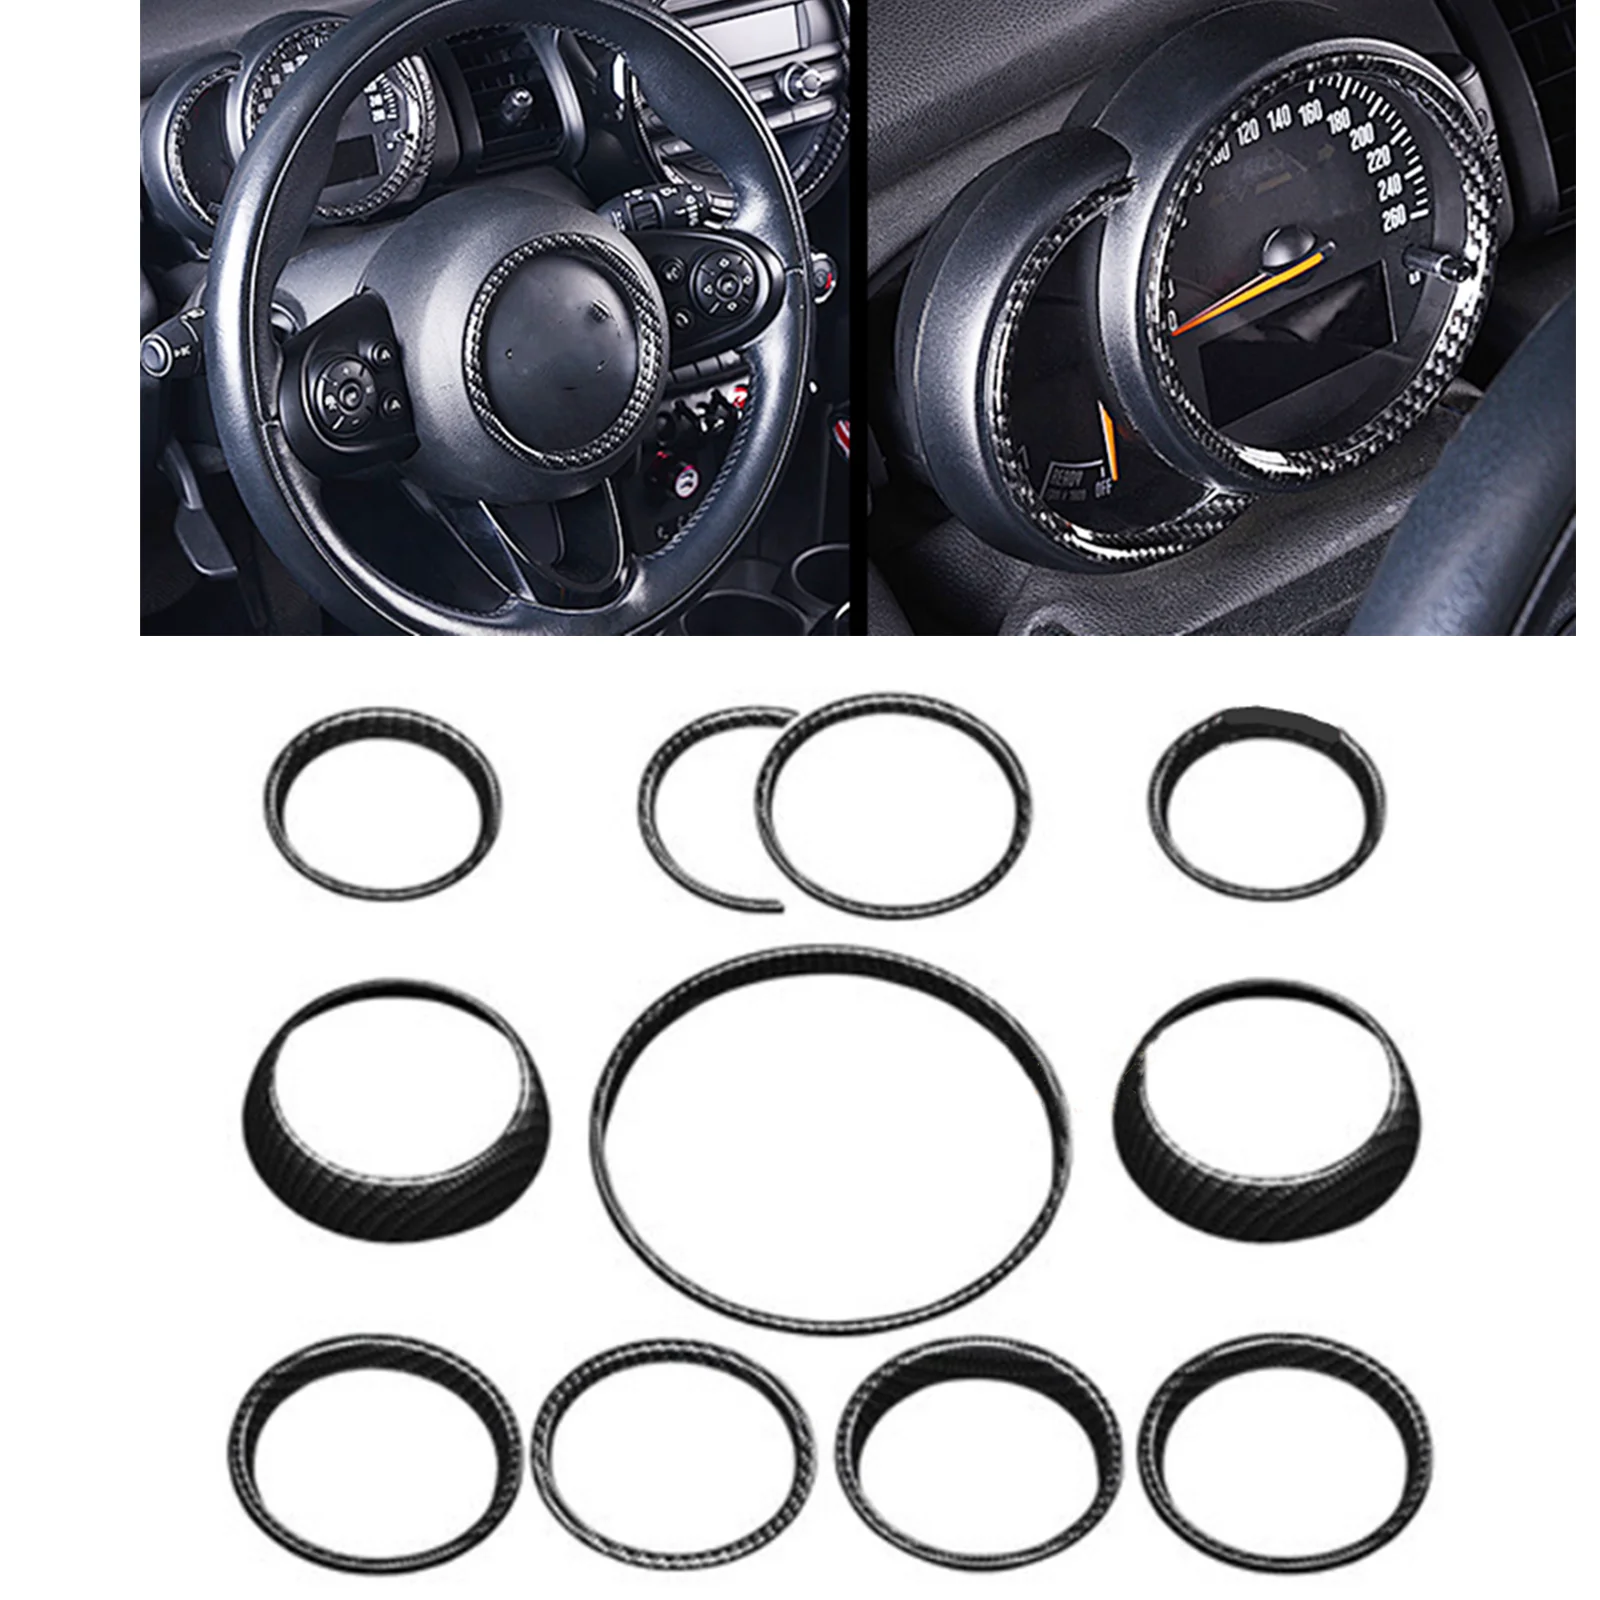 

11PCS Car Gear Steering Wheel Trim Kit Ring For BMW Mini Cooper F55 F56 Carbon Fiber Look Dashboard Gauge Pod Cover Frame Strip